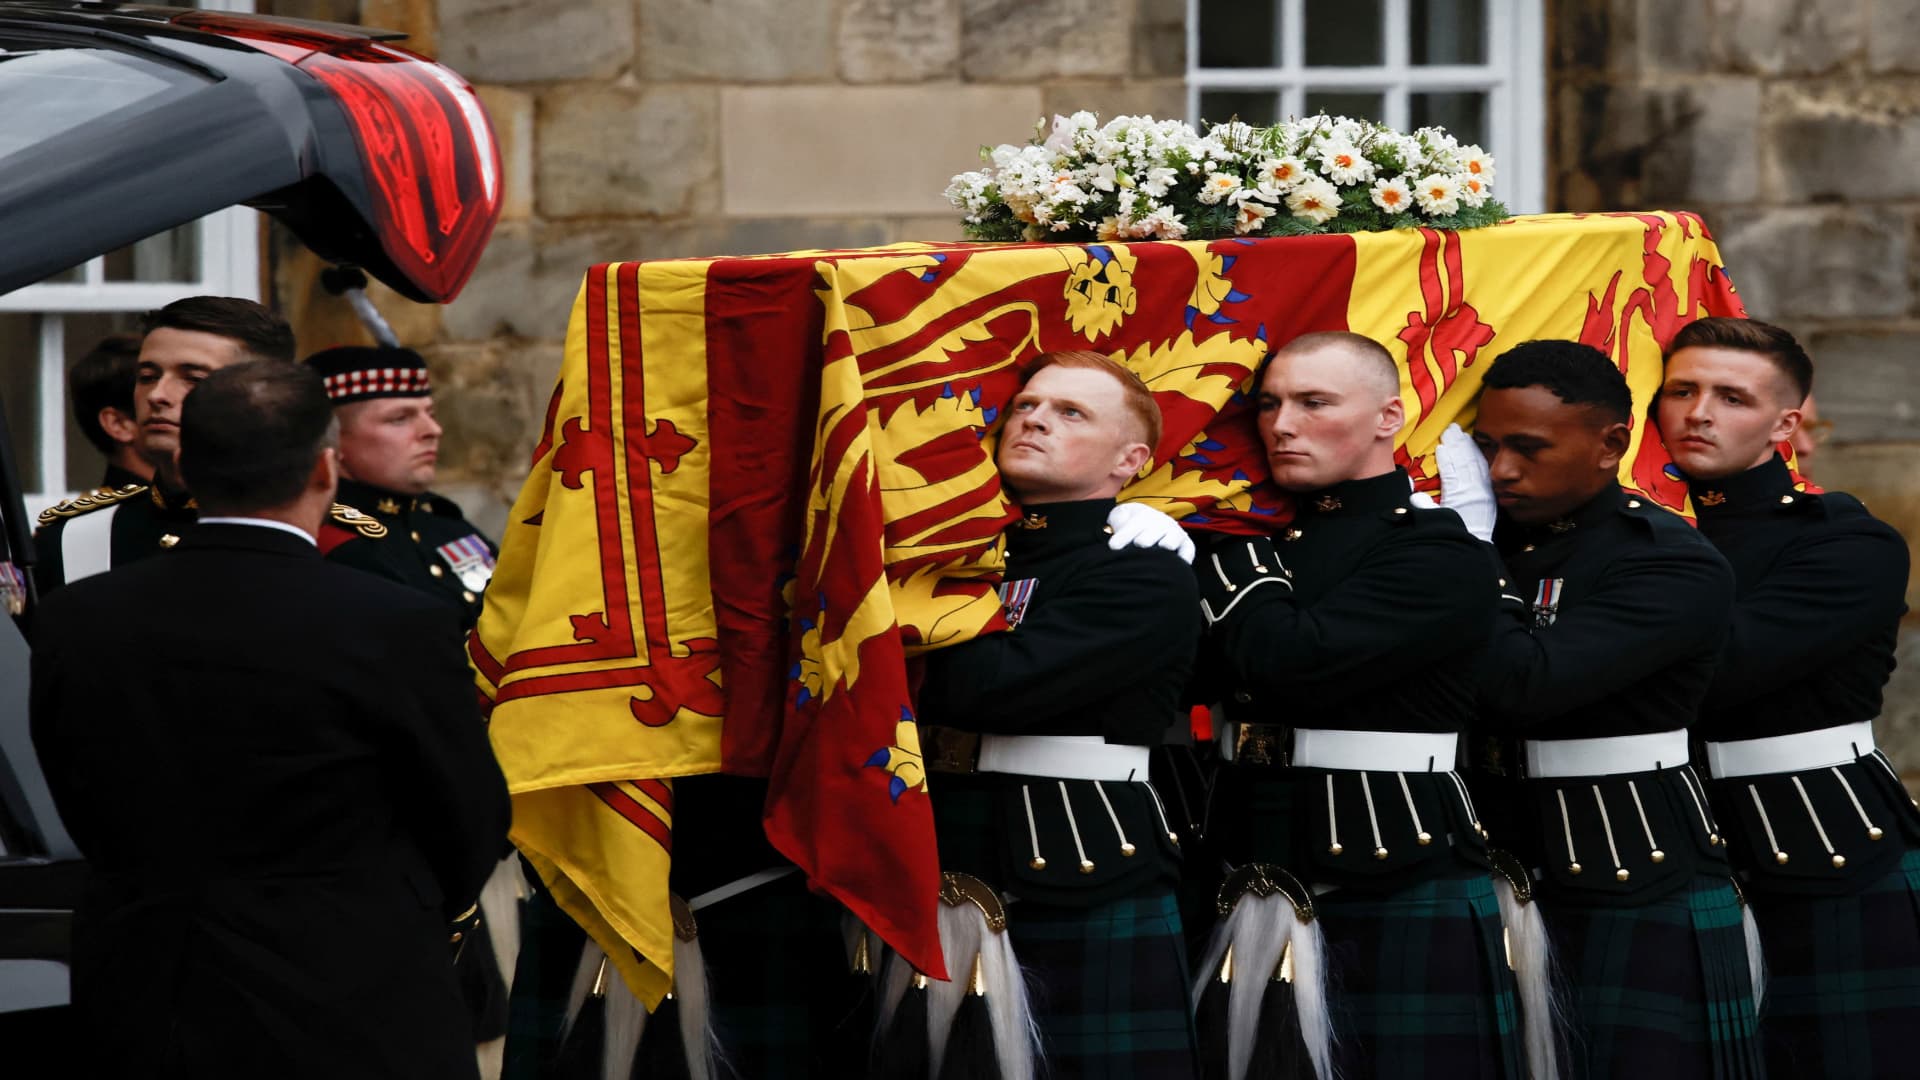 Queen Elizabeth’s coffin arrives in Edinburgh as mourners line streets